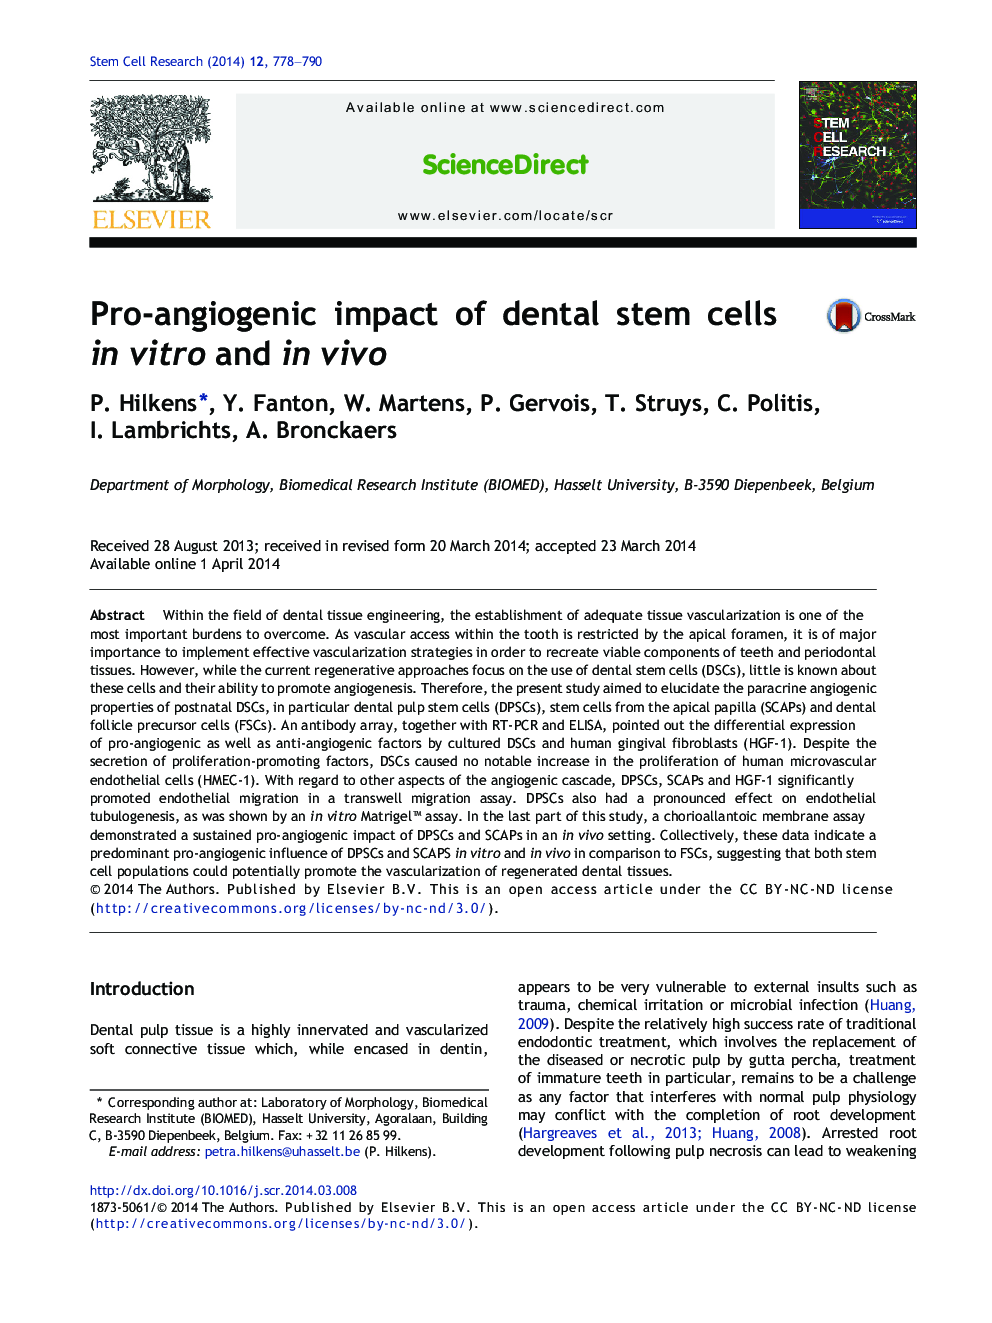 Pro-angiogenic impact of dental stem cells in vitro and in vivo